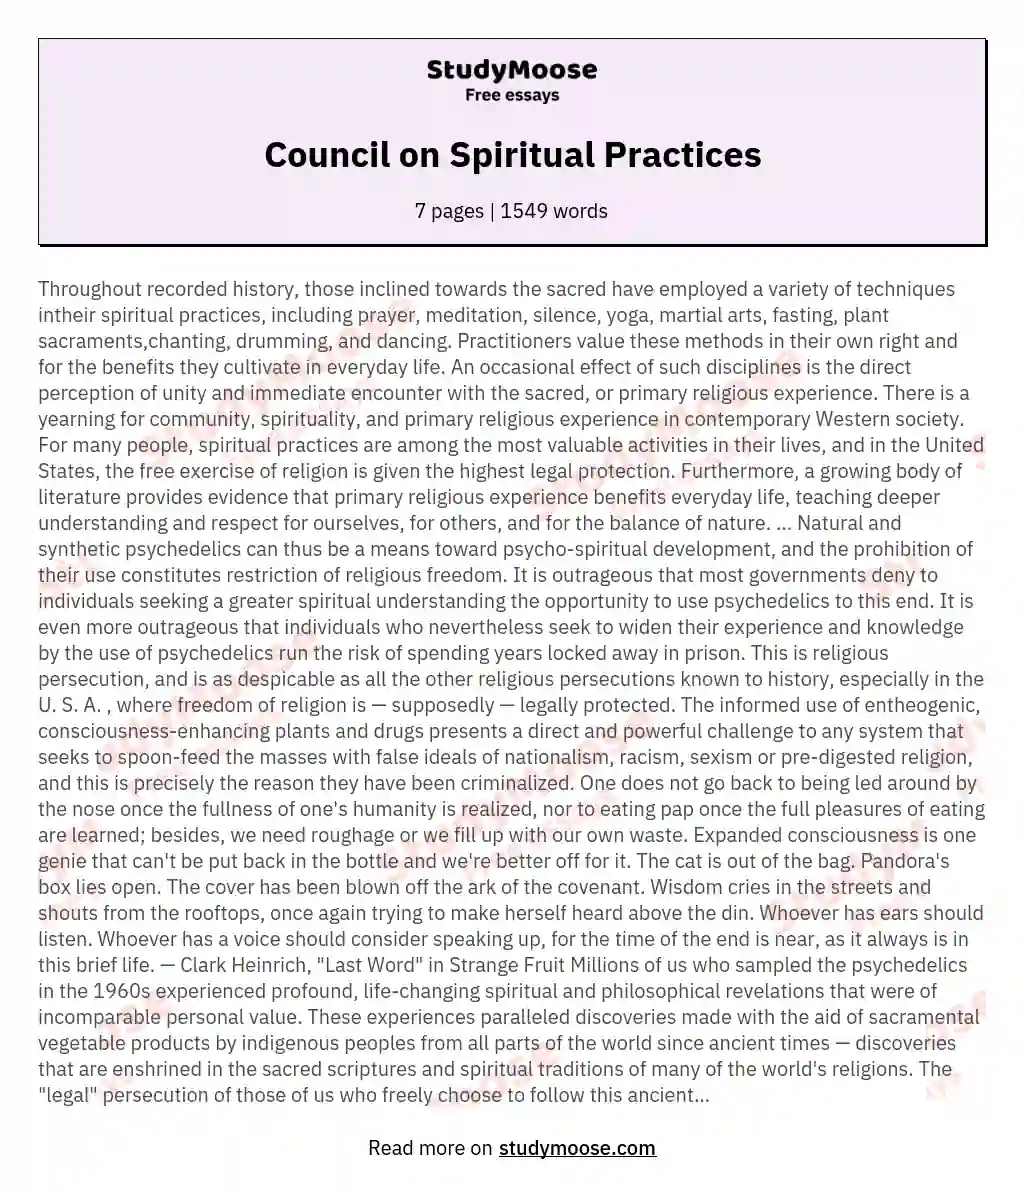 Council on Spiritual Practices essay